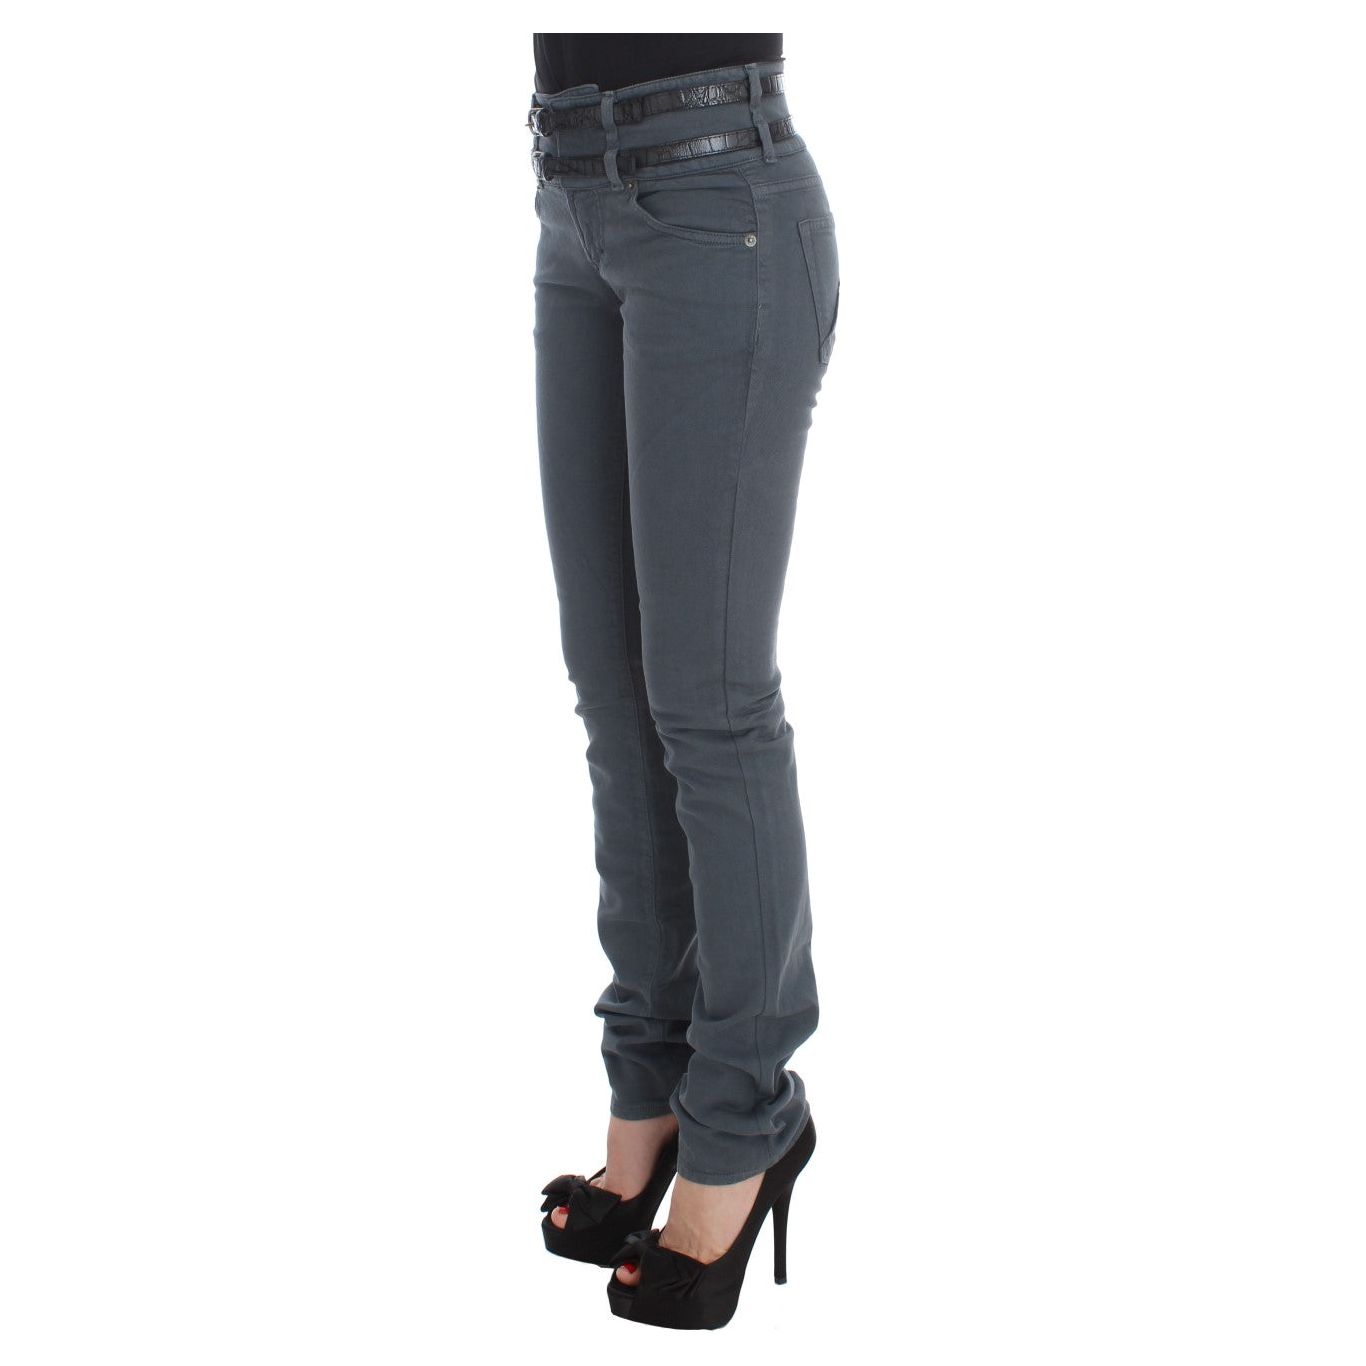 John Galliano Sleek Slim Fit Italian Jeans in Chic Blue Jeans & Pants blue-cotton-blend-slim-fit-high-waist-jeans